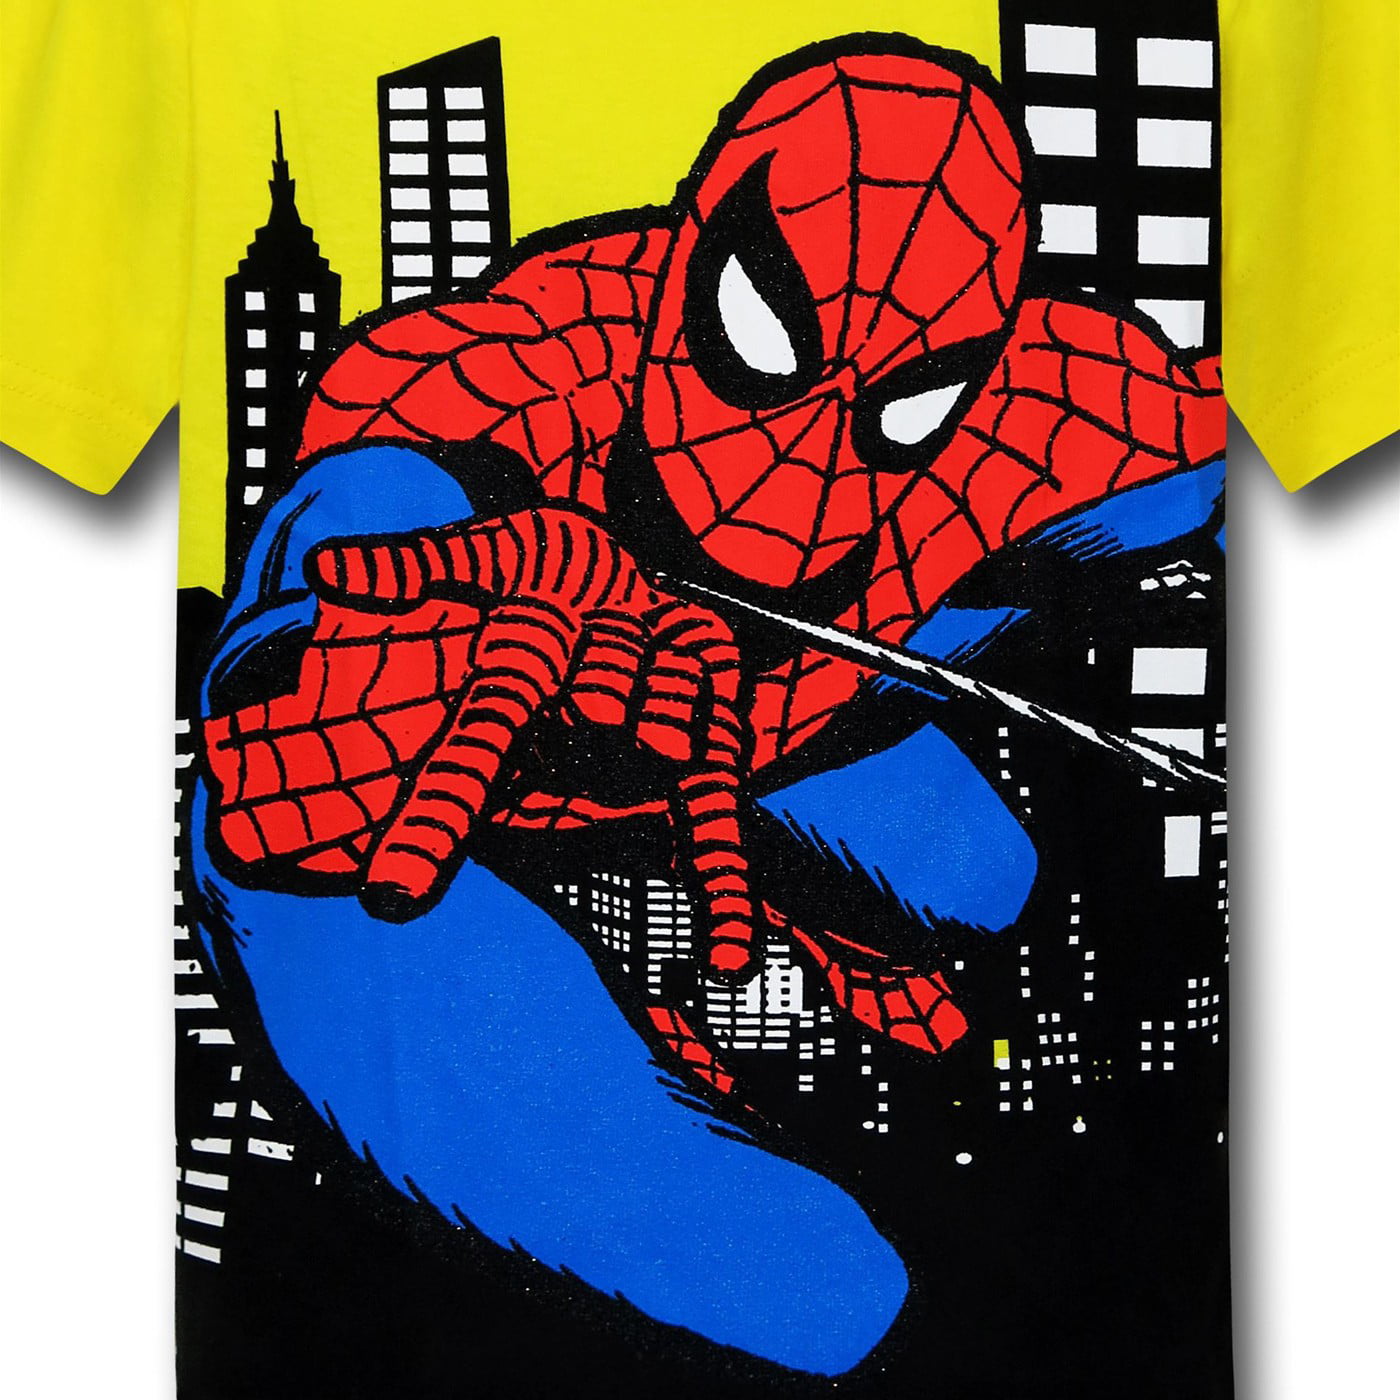 Spiderman City Slinger Kids T-Shirt-Juvenile 5/6